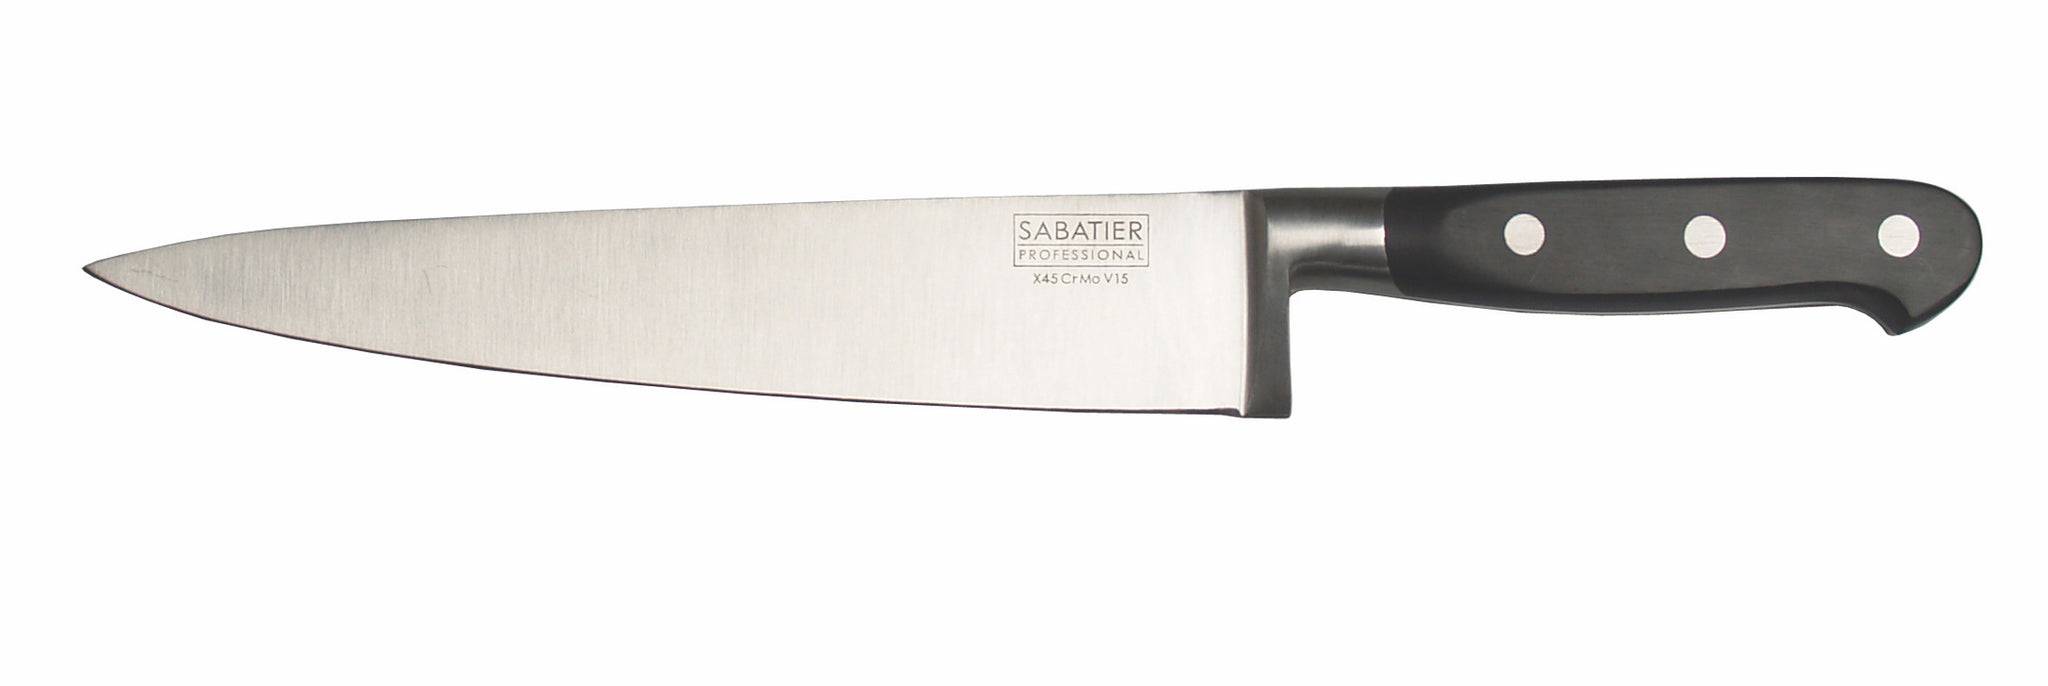 Sabatier 6 Inch Cooks Knife